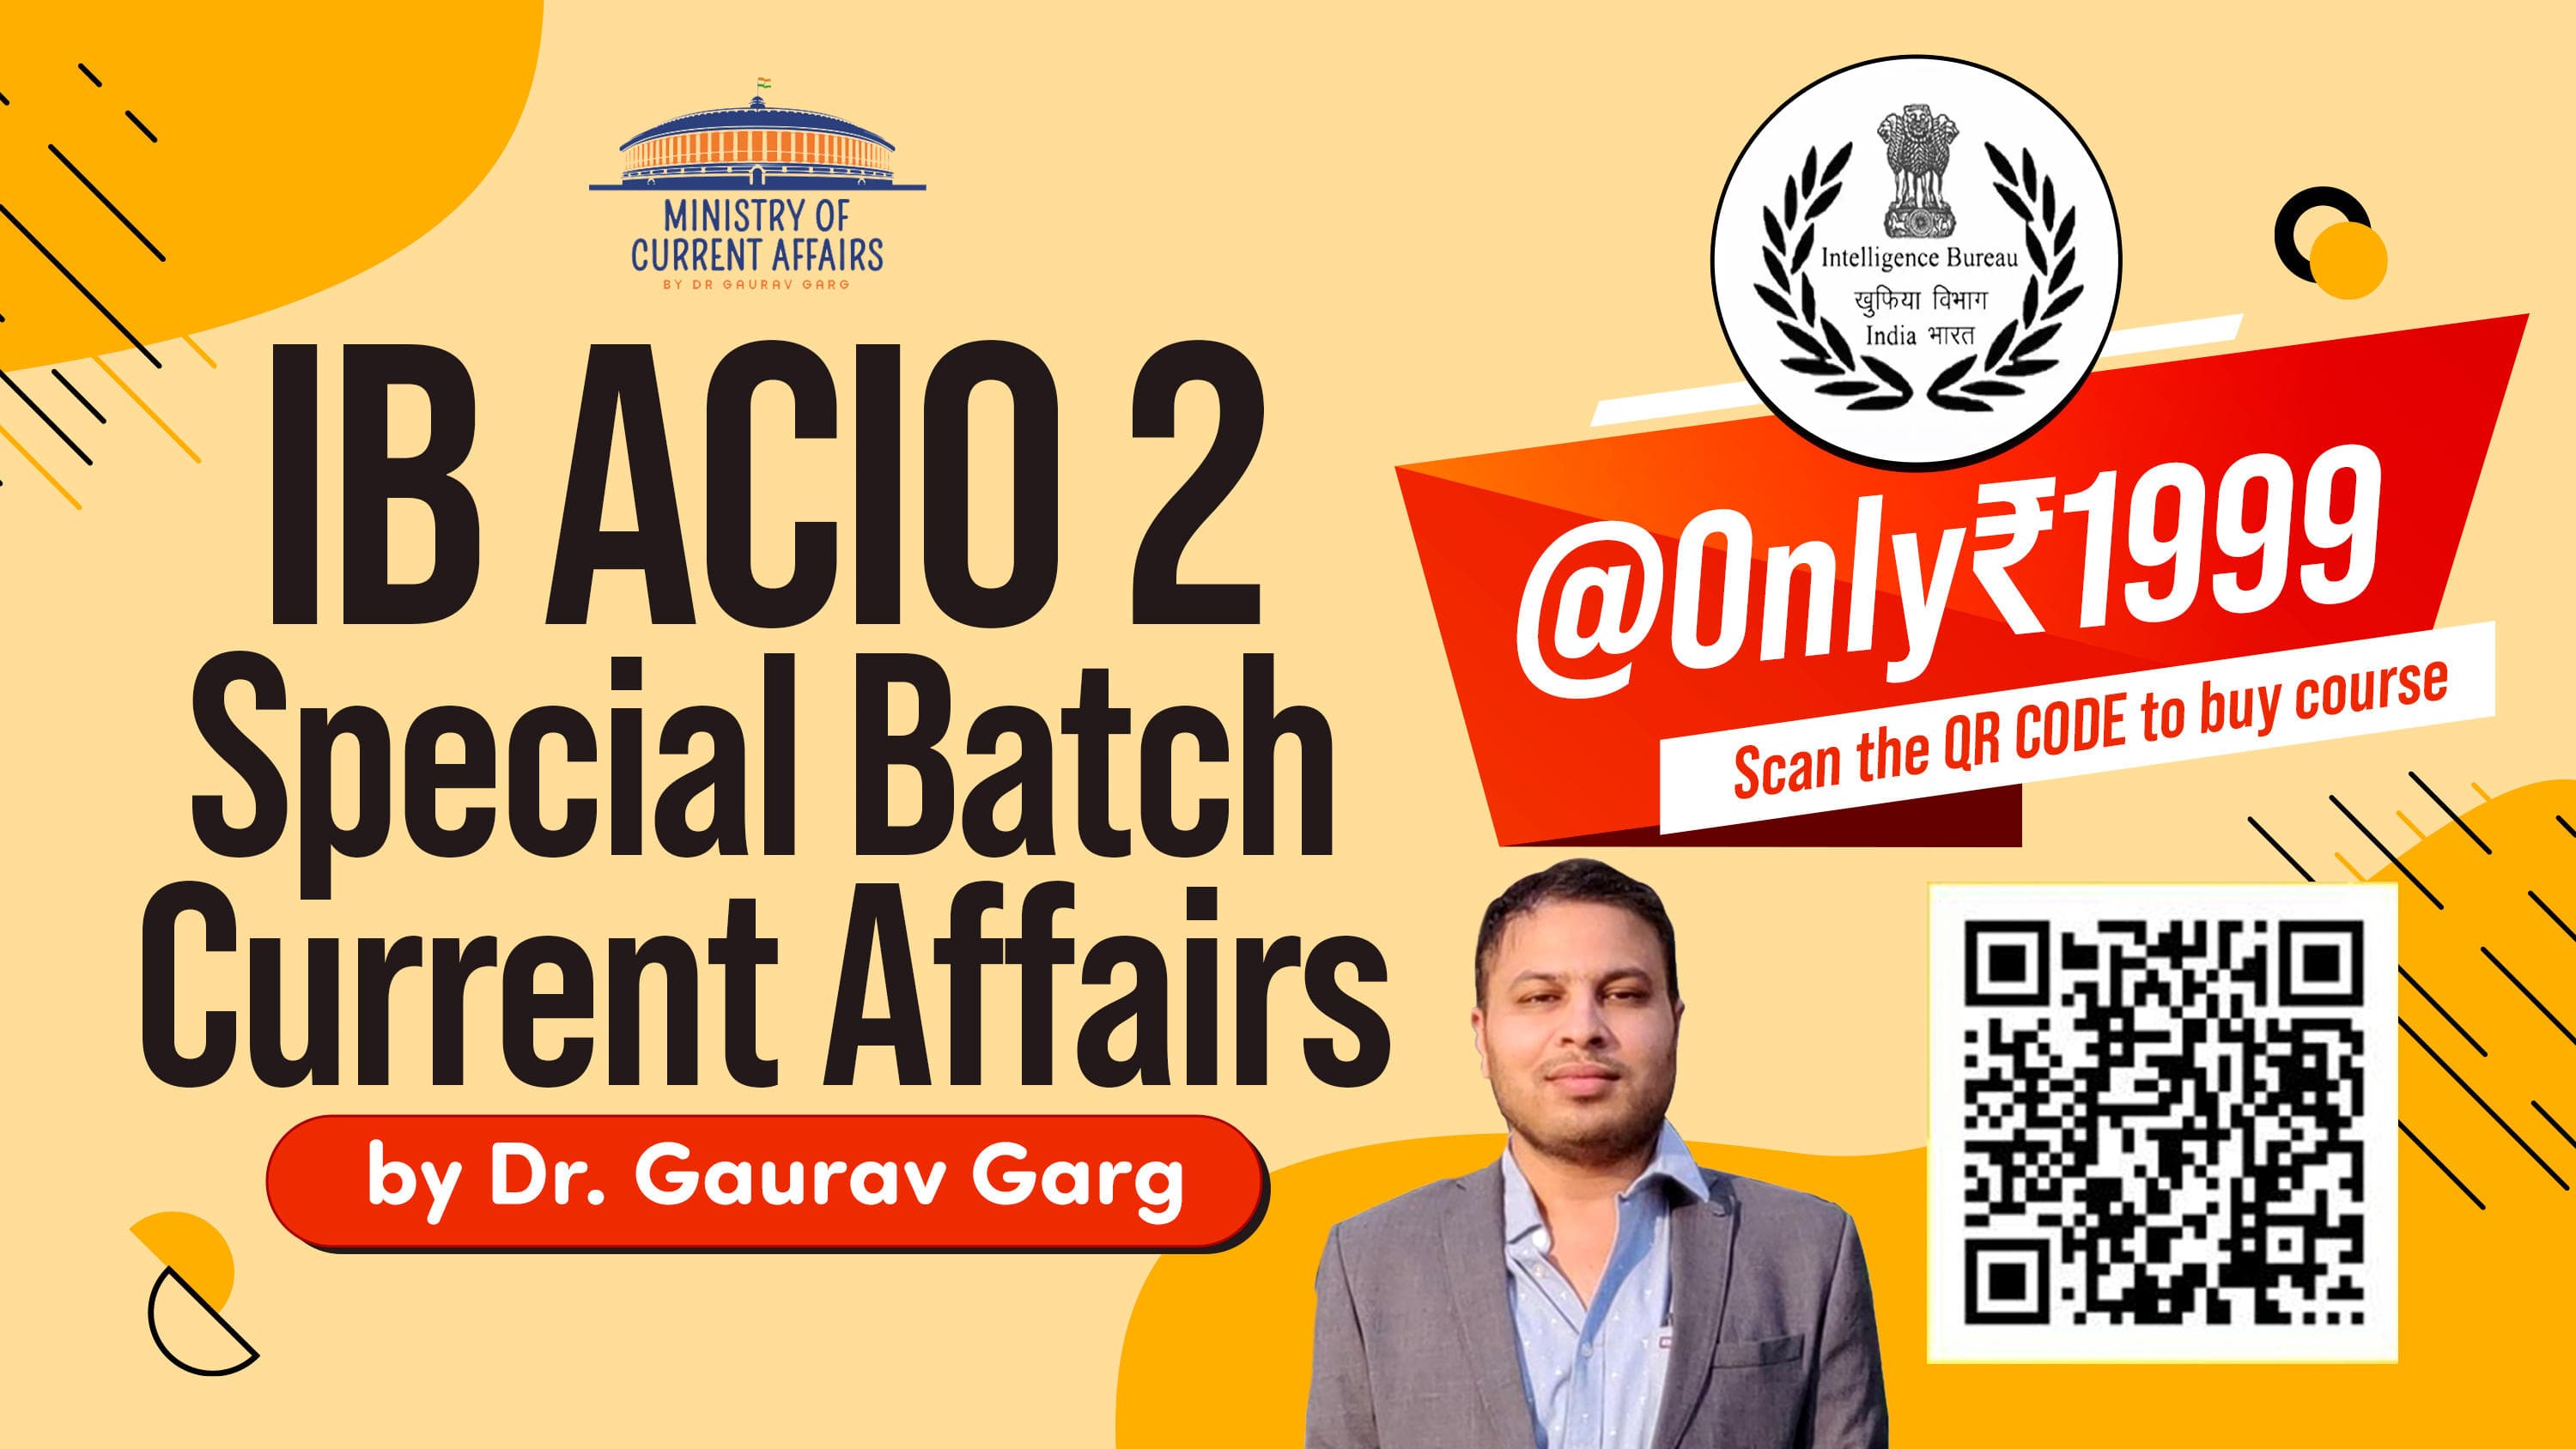 Current Affairs Course for IB ACIO 2 by Dr Gaurav Garg